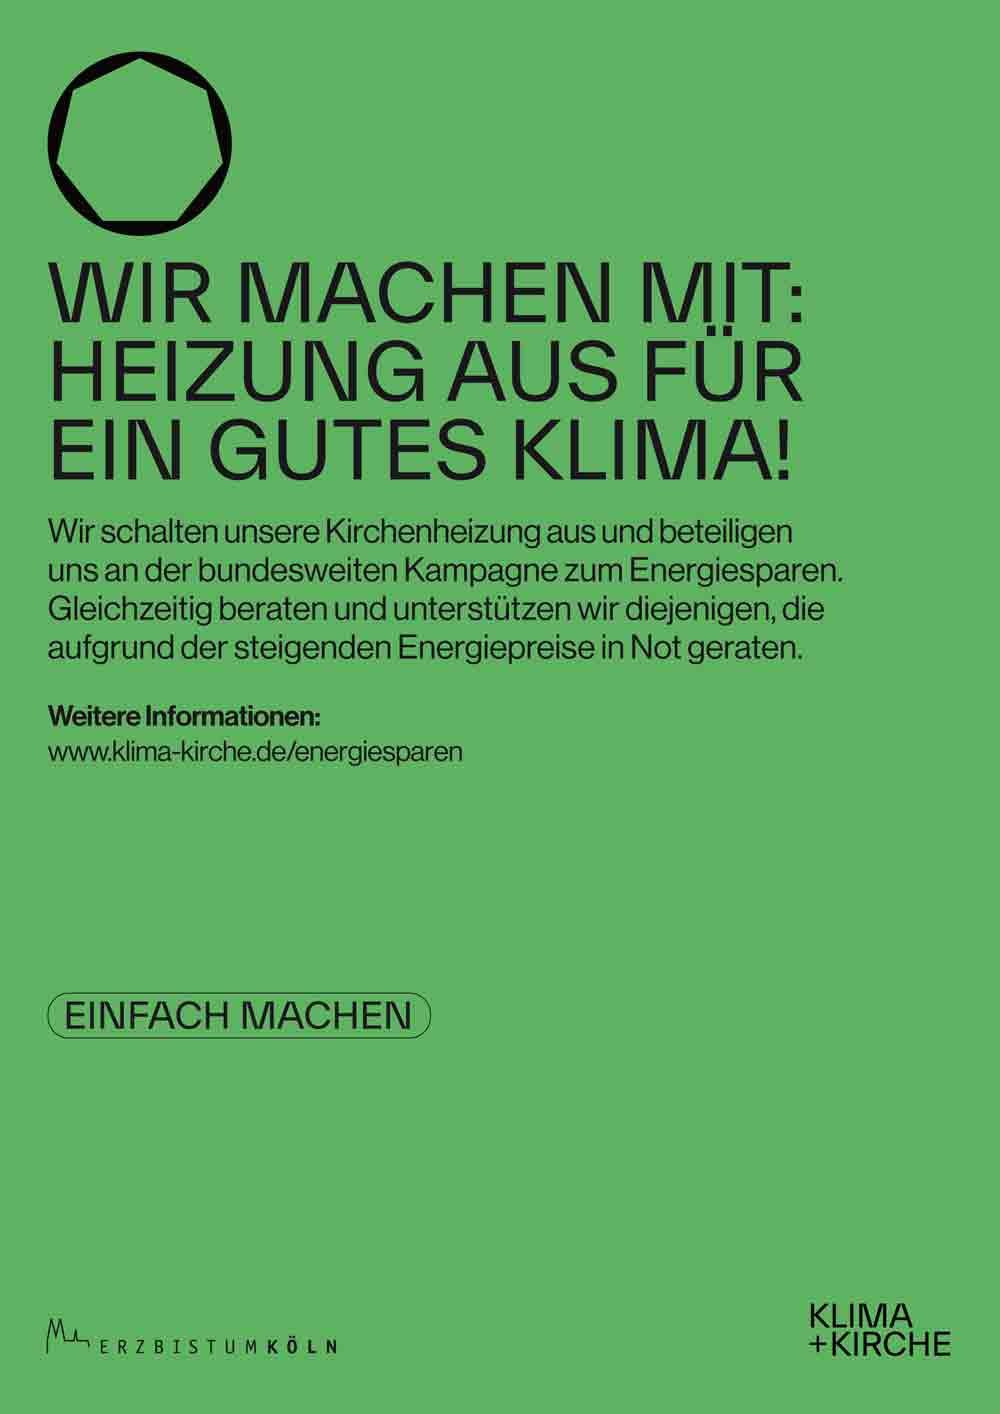 Plakat Energiesparen des Erzbistums Köln (c) Erzbistum Köln